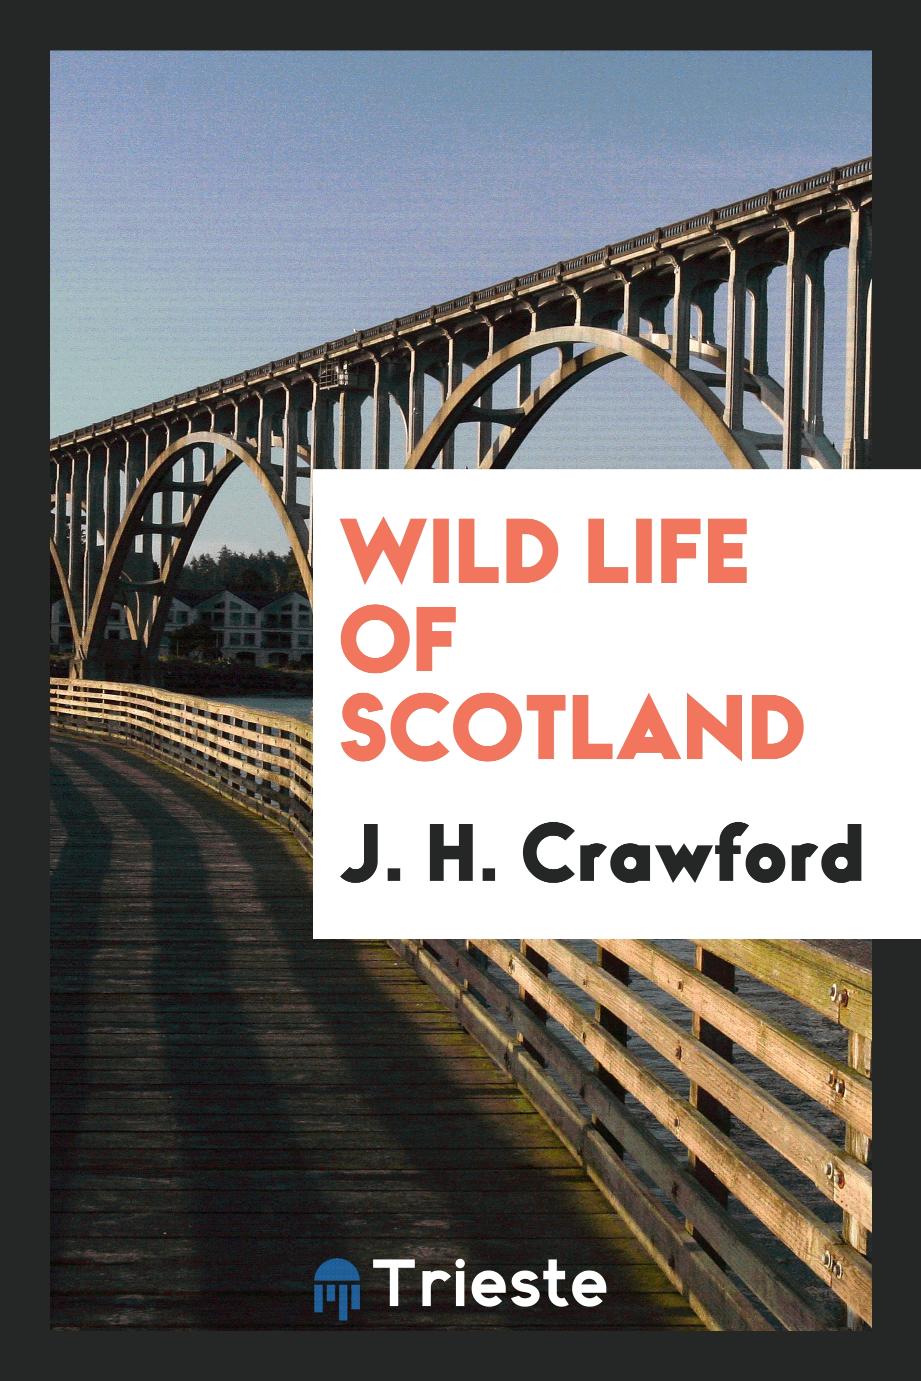 Wild life of Scotland